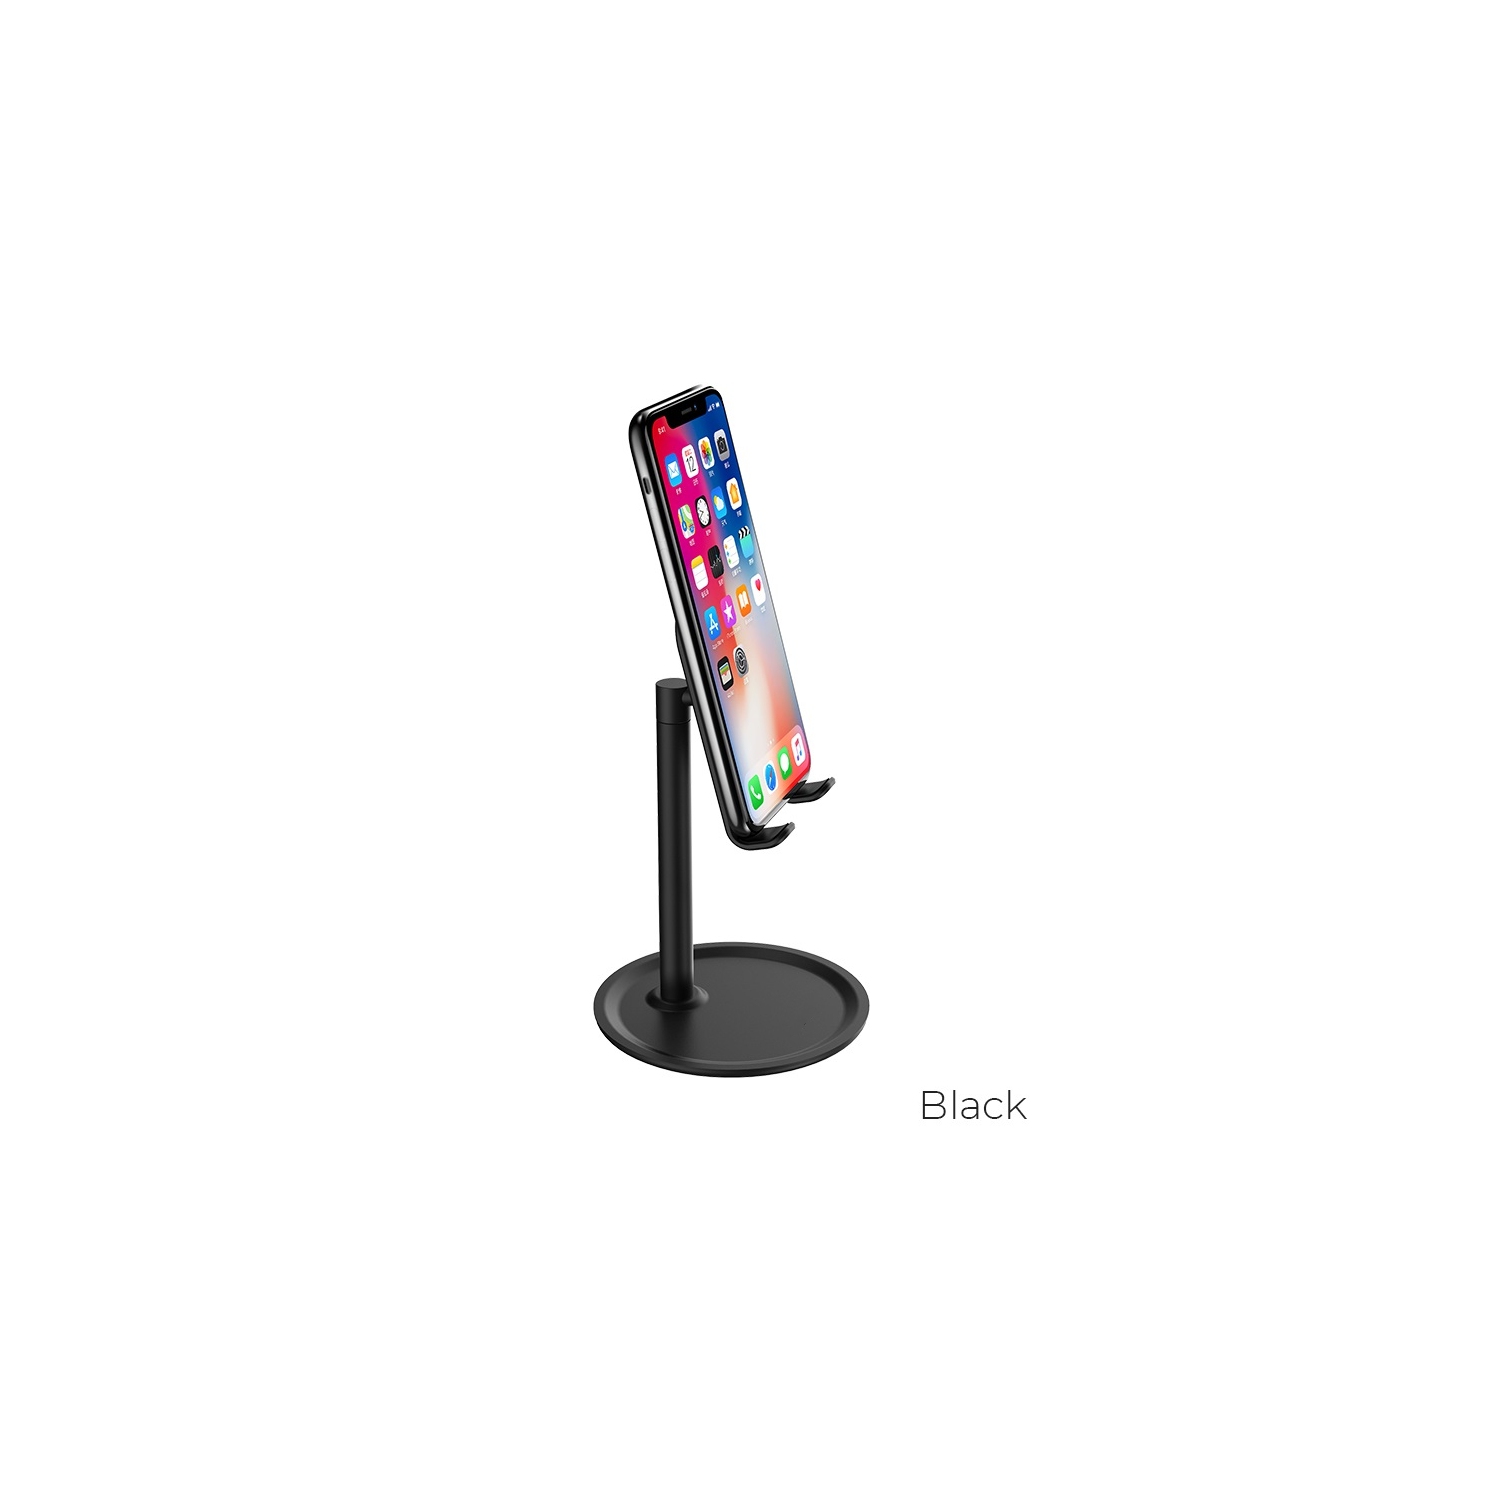 【CSmart】 Rotating Tablet Desk Stand Flexible Cellphone Mount Holder for iPhone / iPad / Samsung Tablet / Smartphone, Black